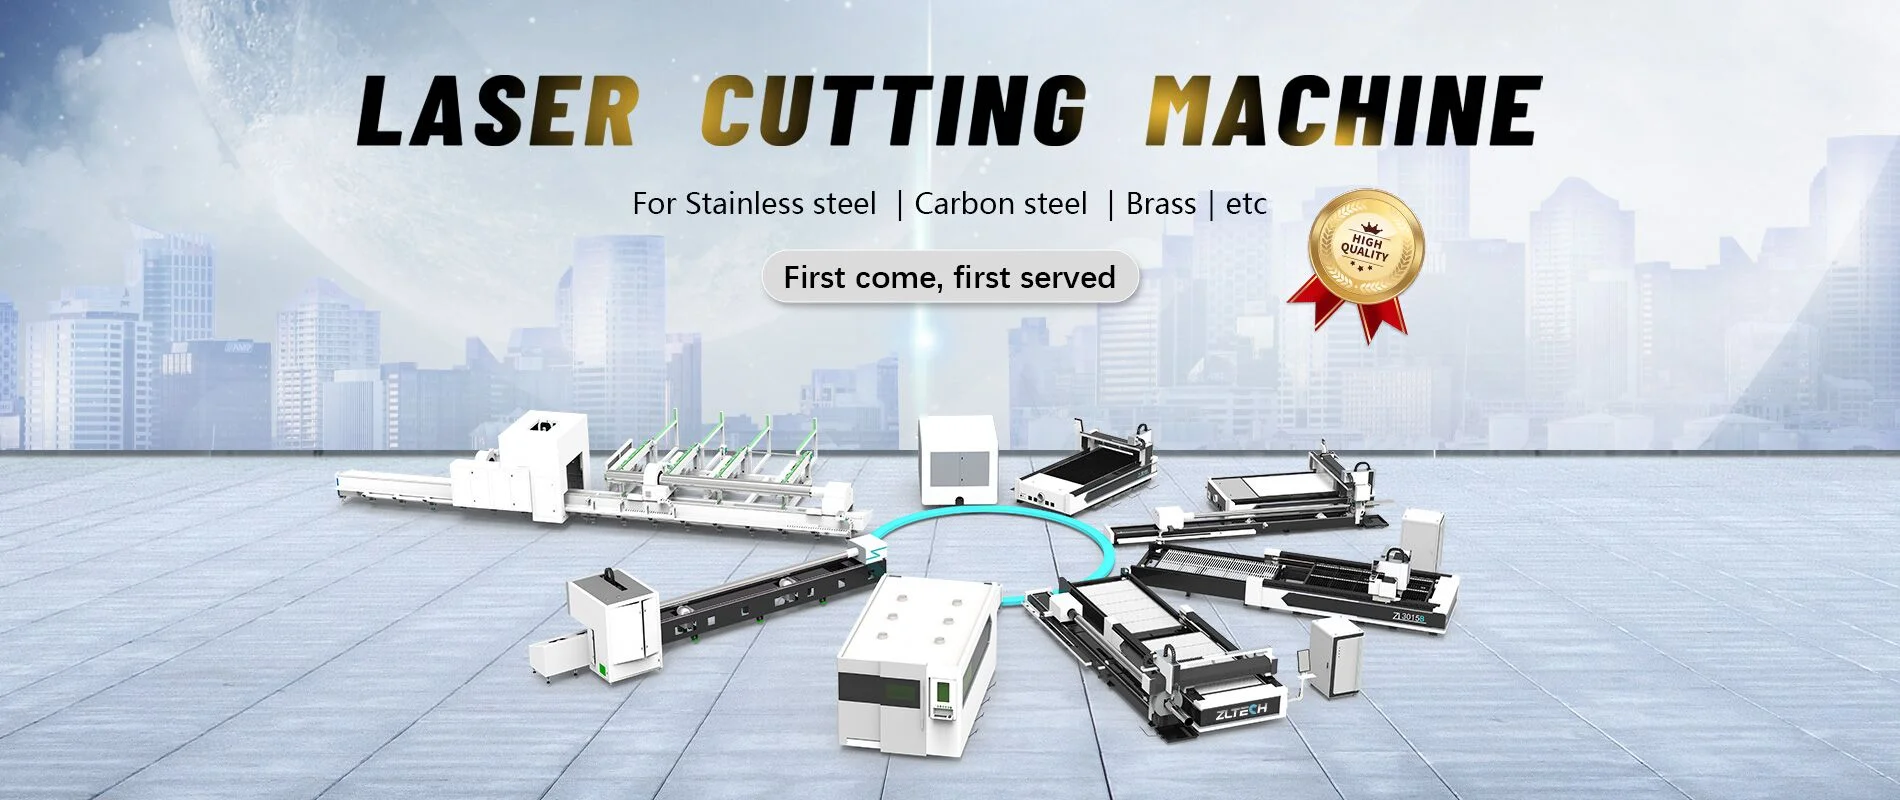 ZLTECH fiber laser cutting machine company banner